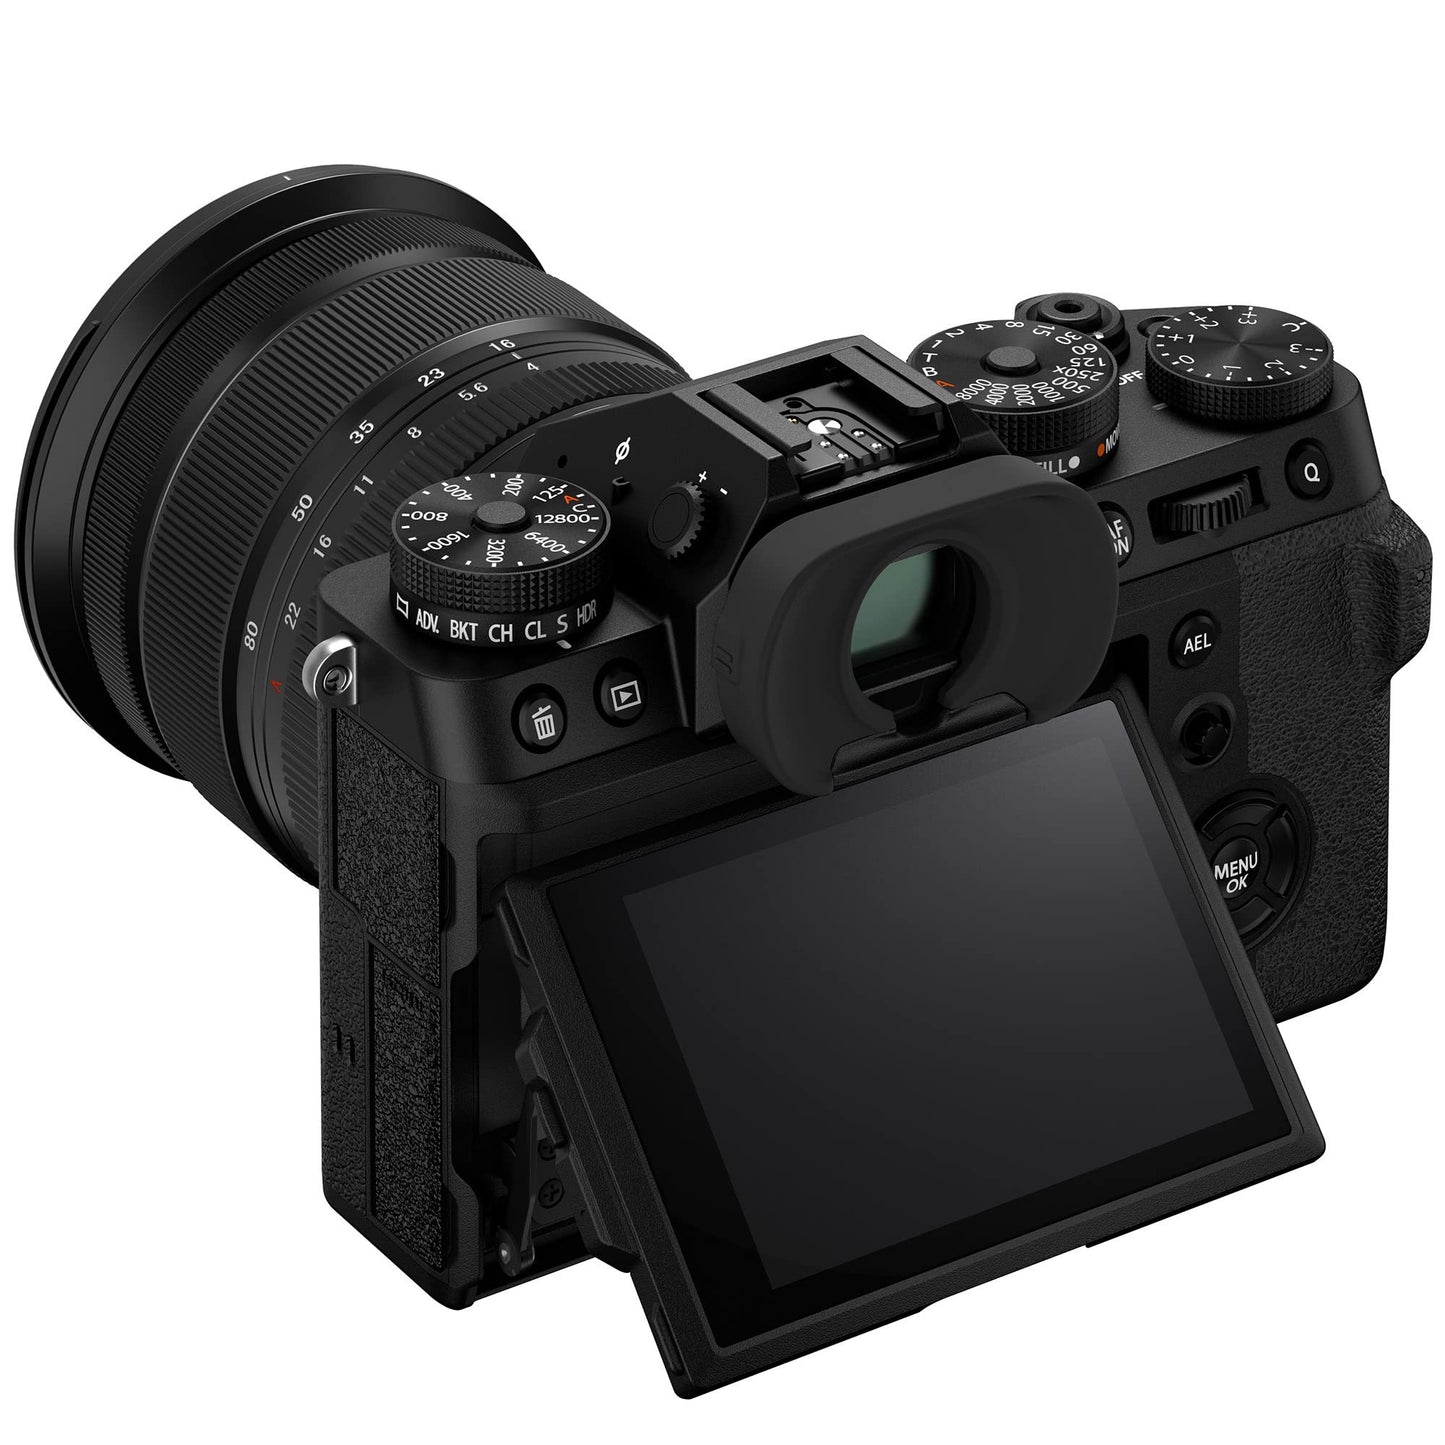 Fujifilm X-T5 Mirrorless Digital Camera XF16-80mm Lens Kit - Black